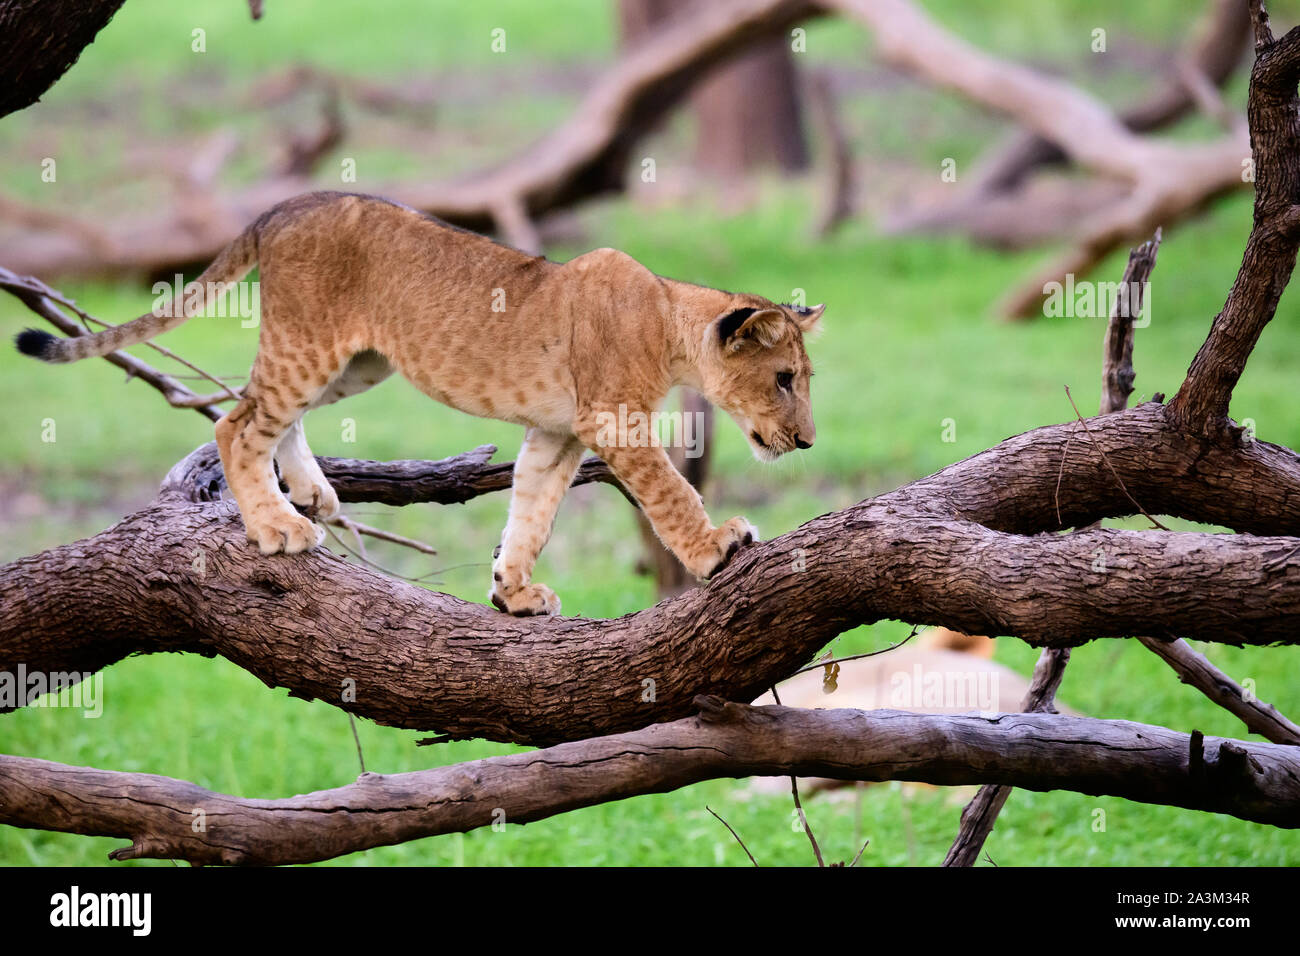 lion cub exploring its environment Stock Photo